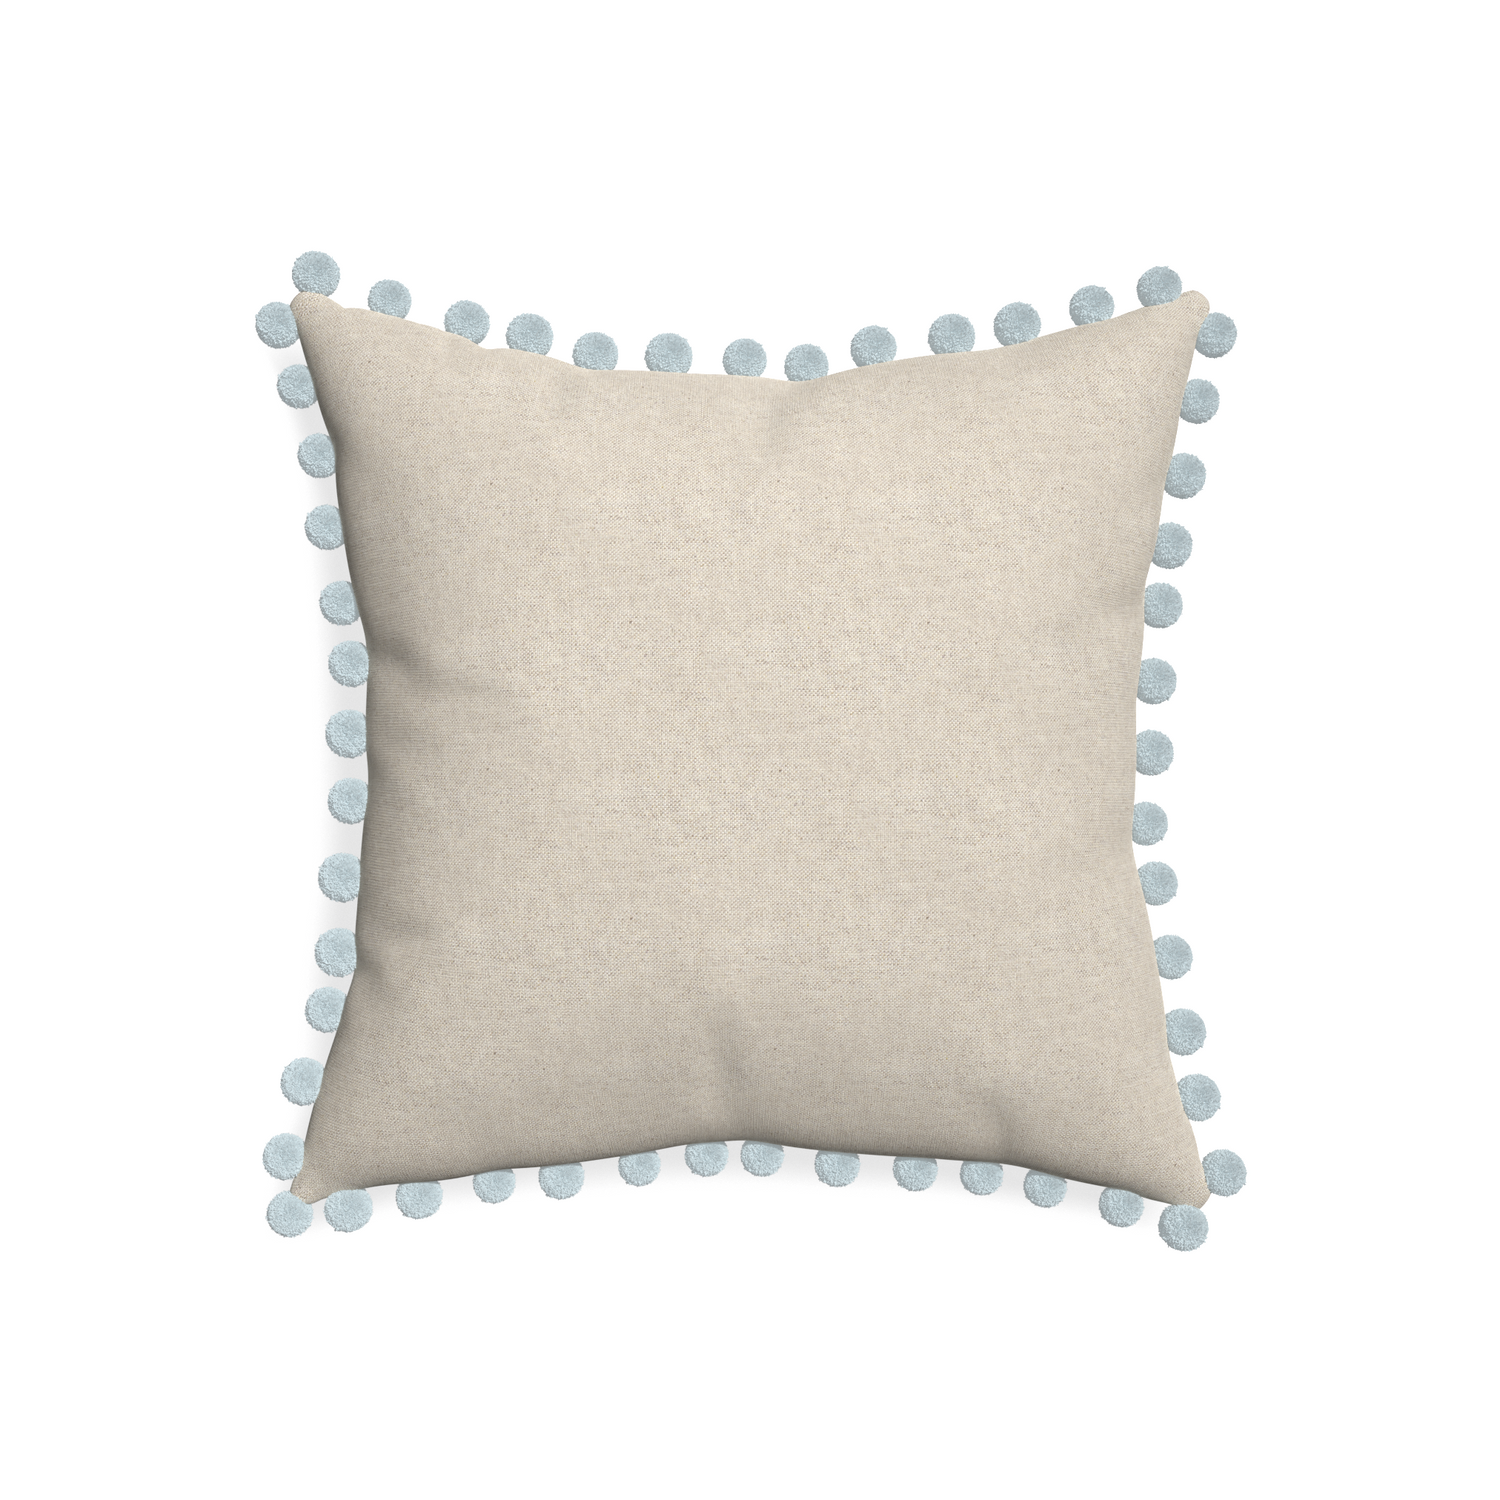 20-square oat custom pillow with powder pom pom on white background